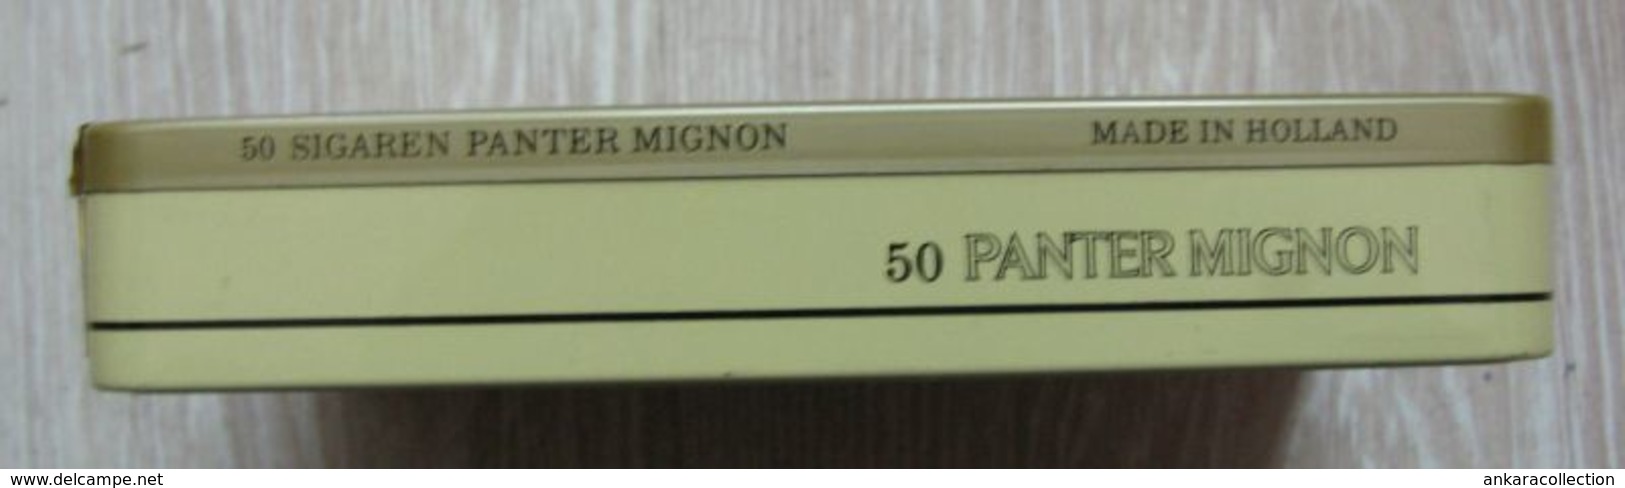 AC - PPPANTER MIGNON 50 CIGARS TOBACCO EMPTY VINTAGE TIN BOX NEDERLANDS - Tabaksdozen (leeg)